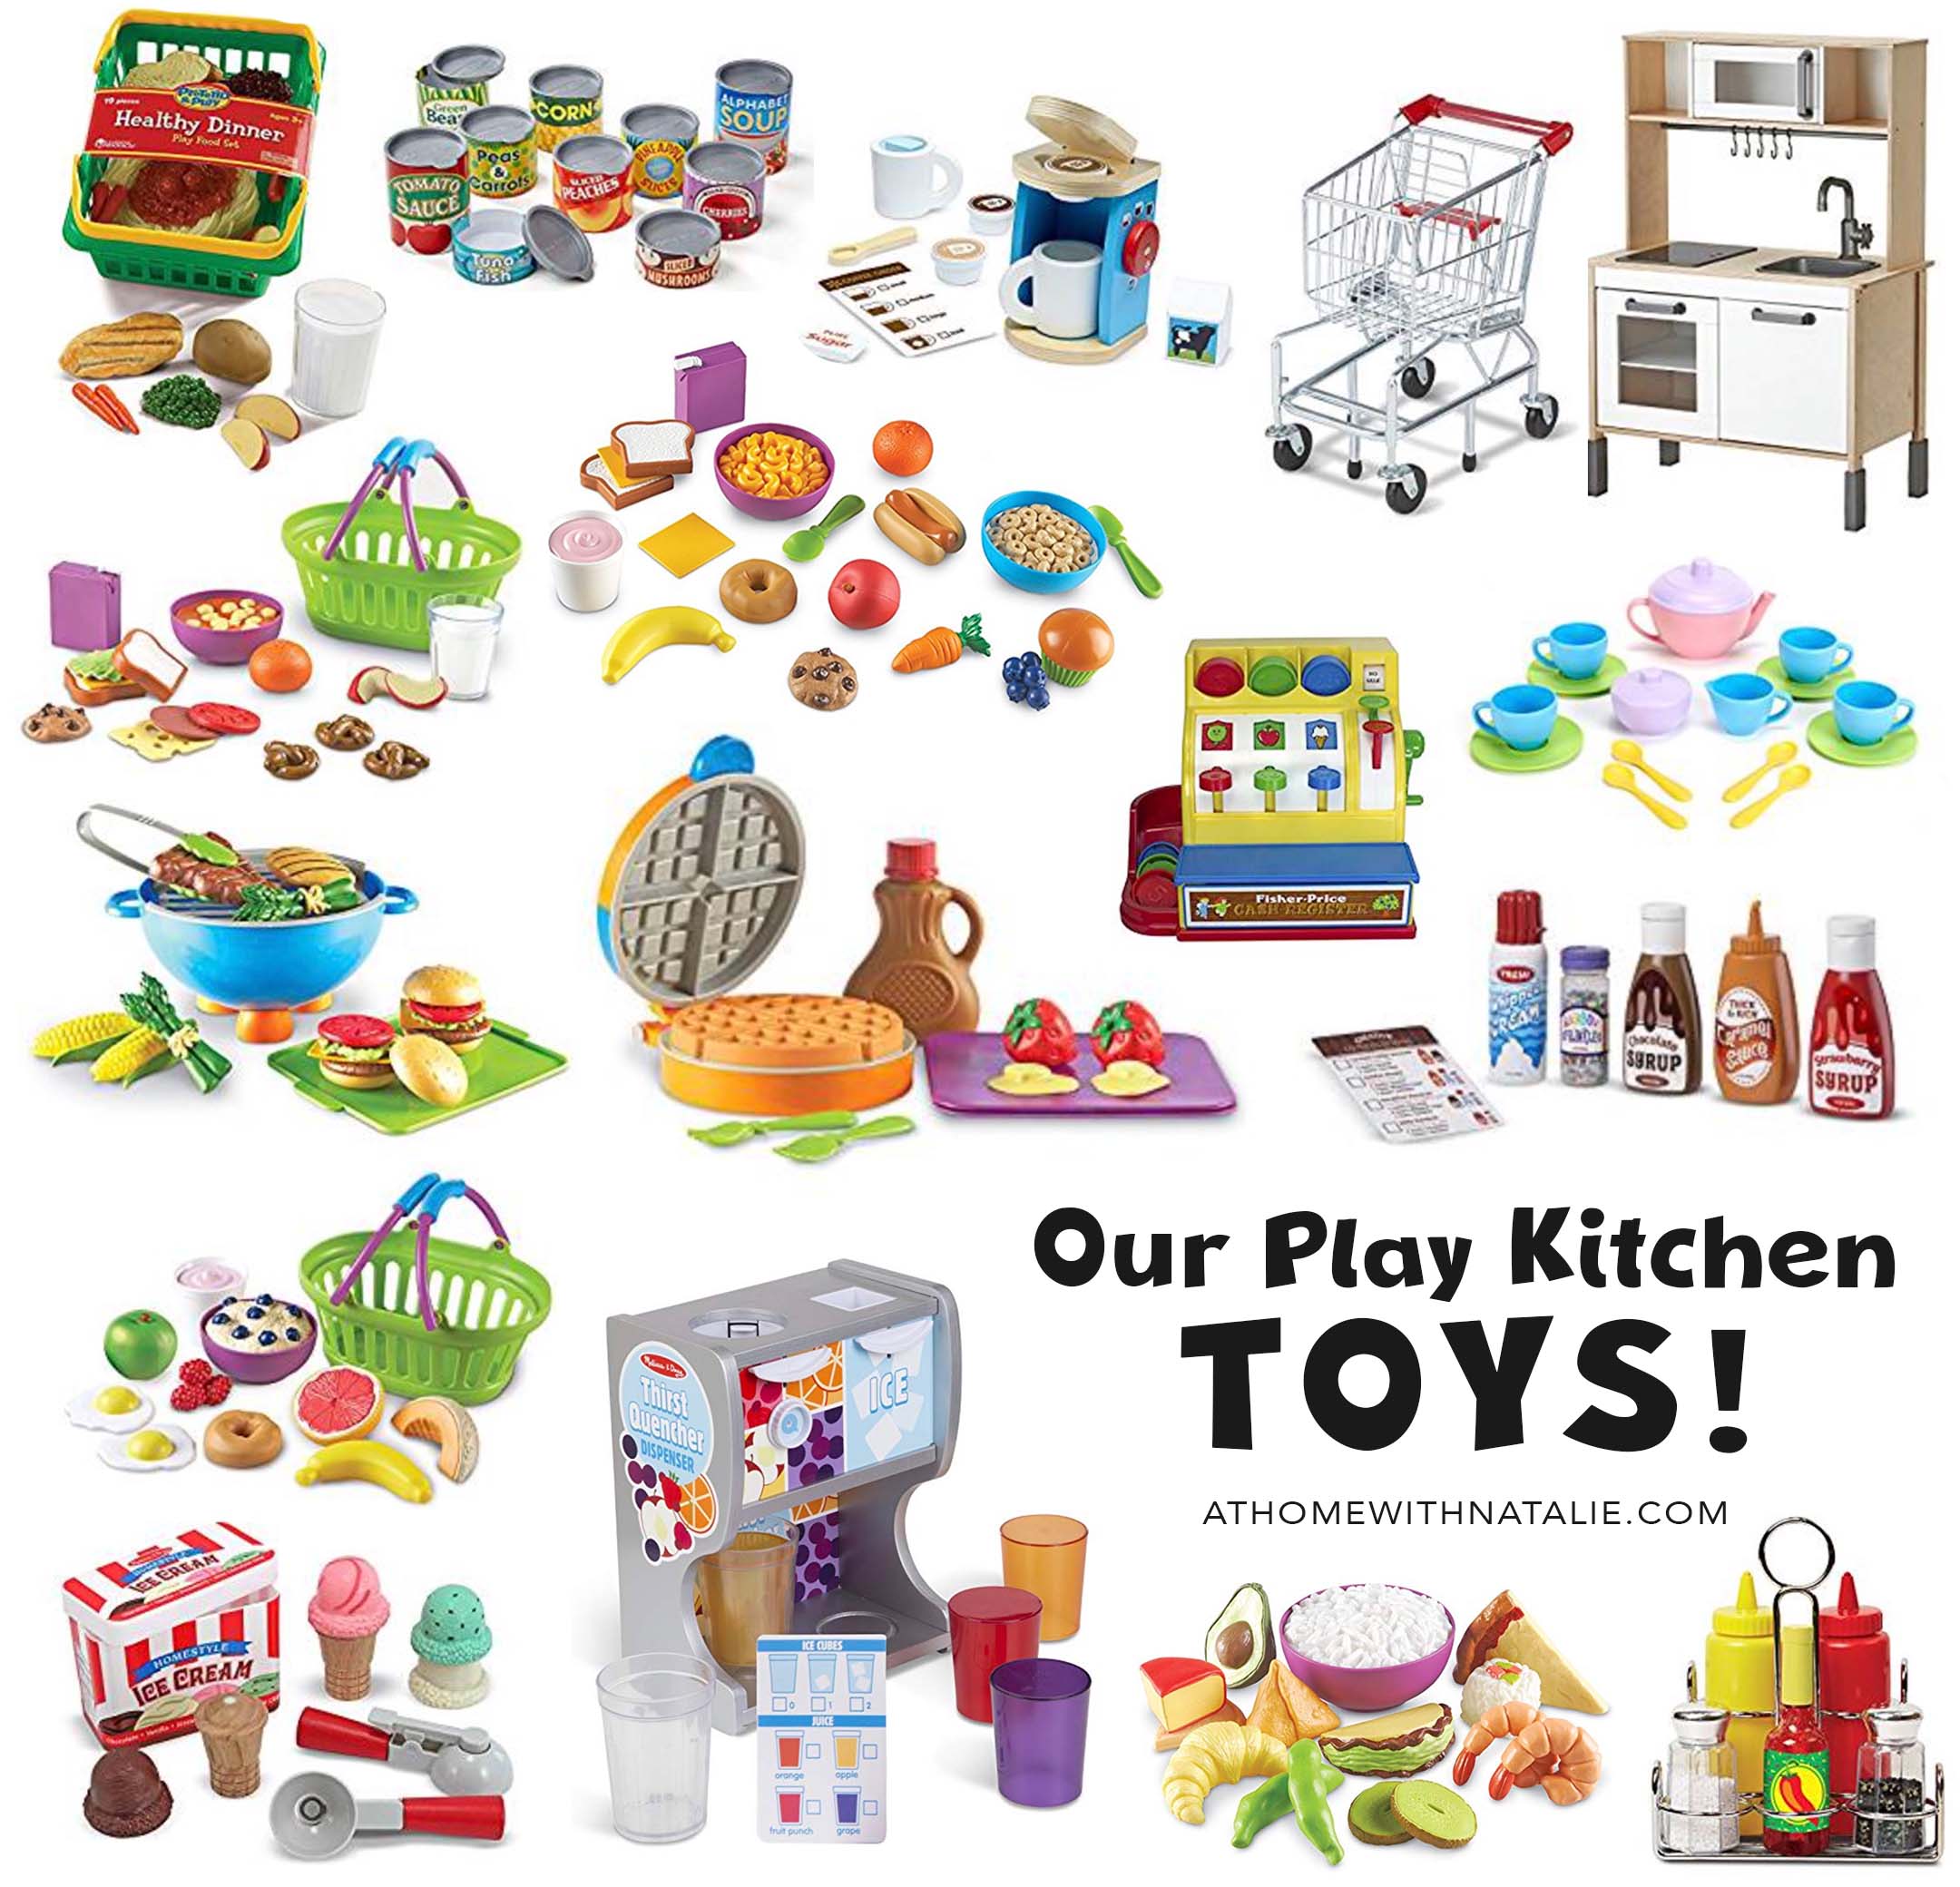 http://www.athomewithnatalie.com/wp-content/uploads/2018/11/play-kitchen-toy-gift-guide-athomewithnatalie.jpg